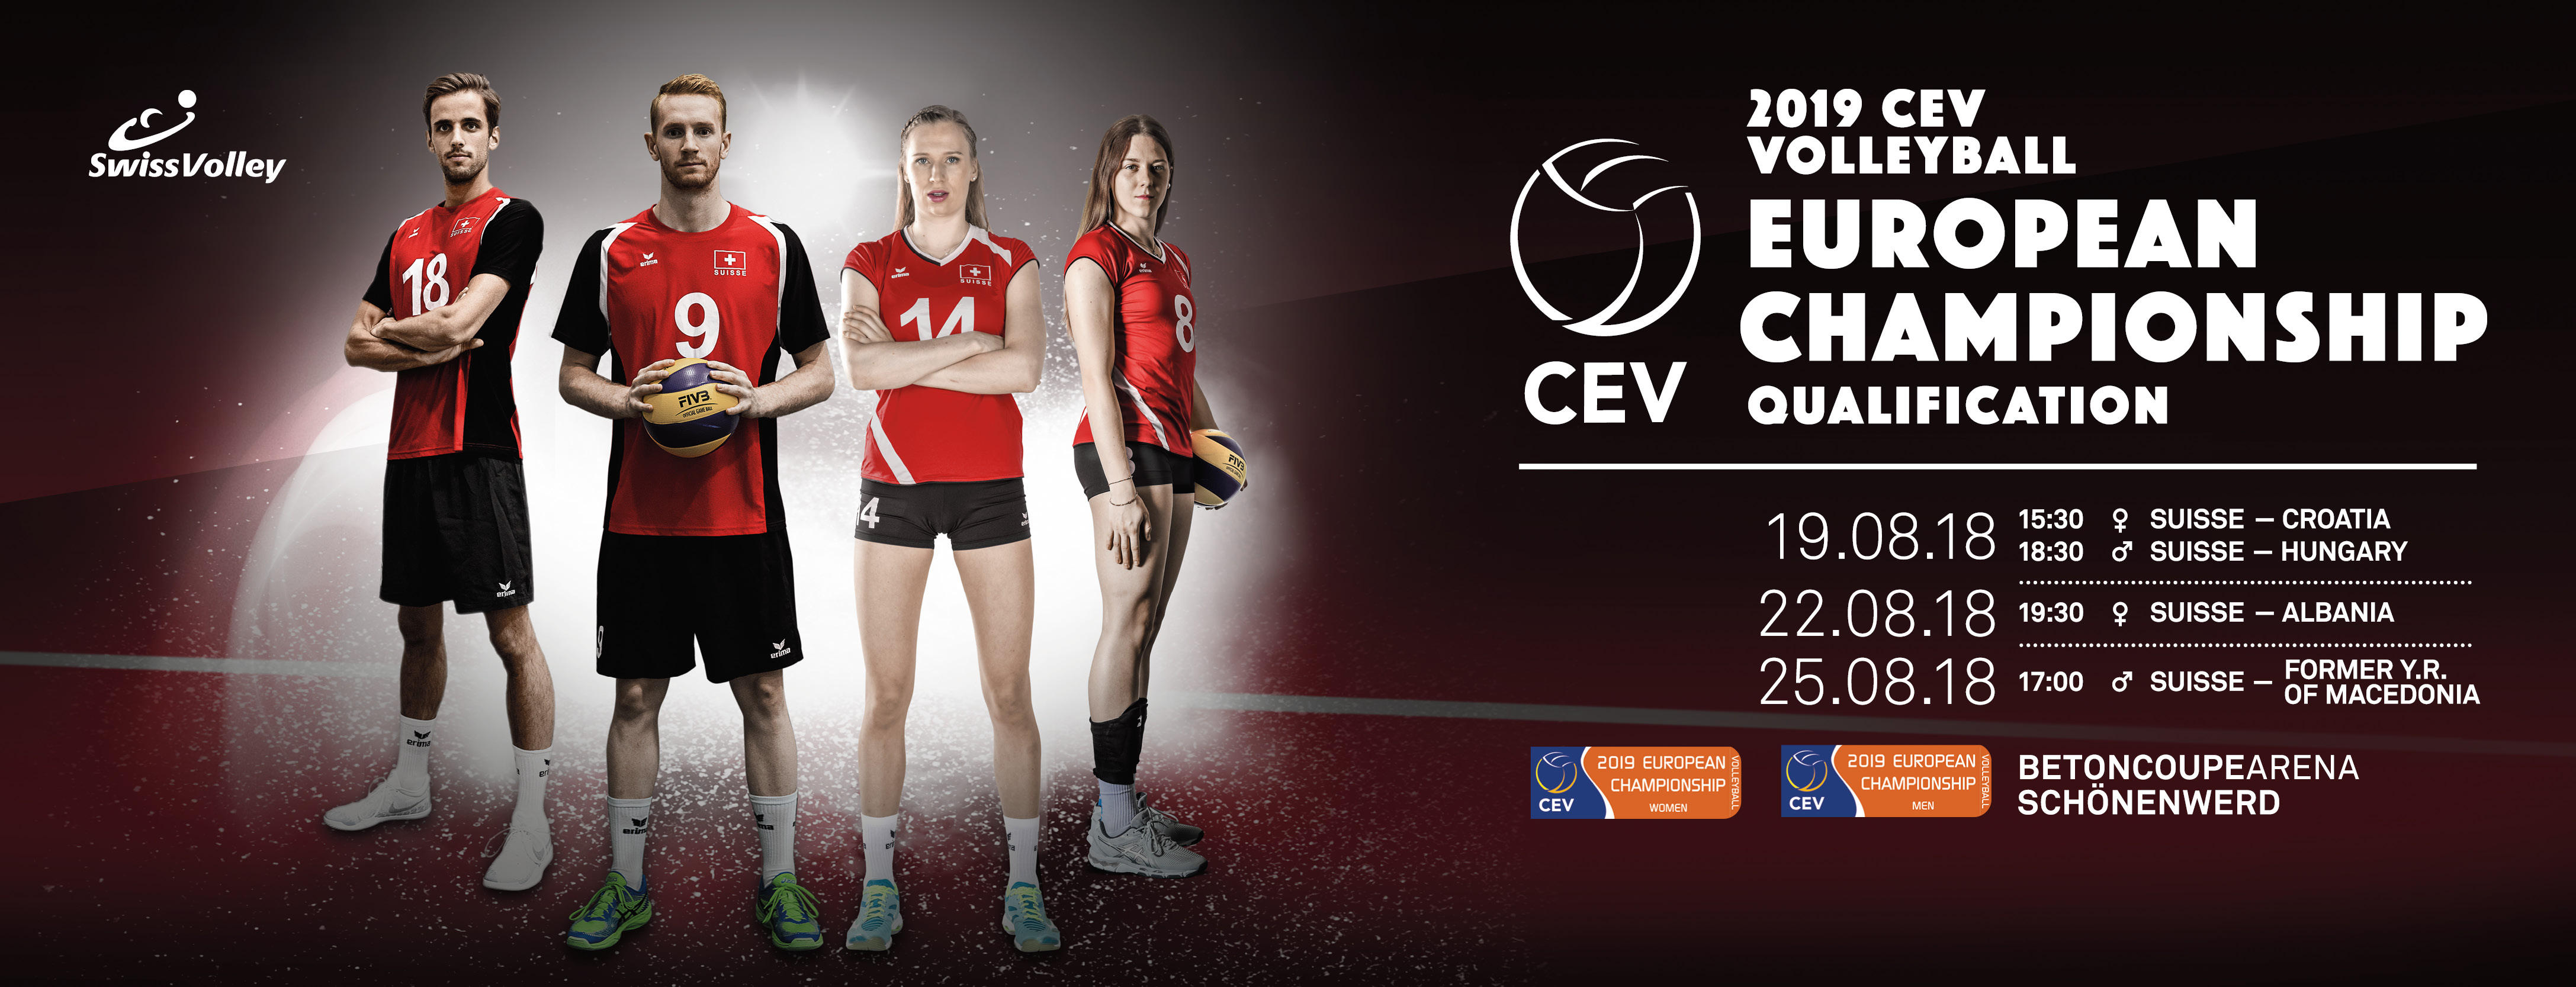 CEV Volleyball European Championship 2019